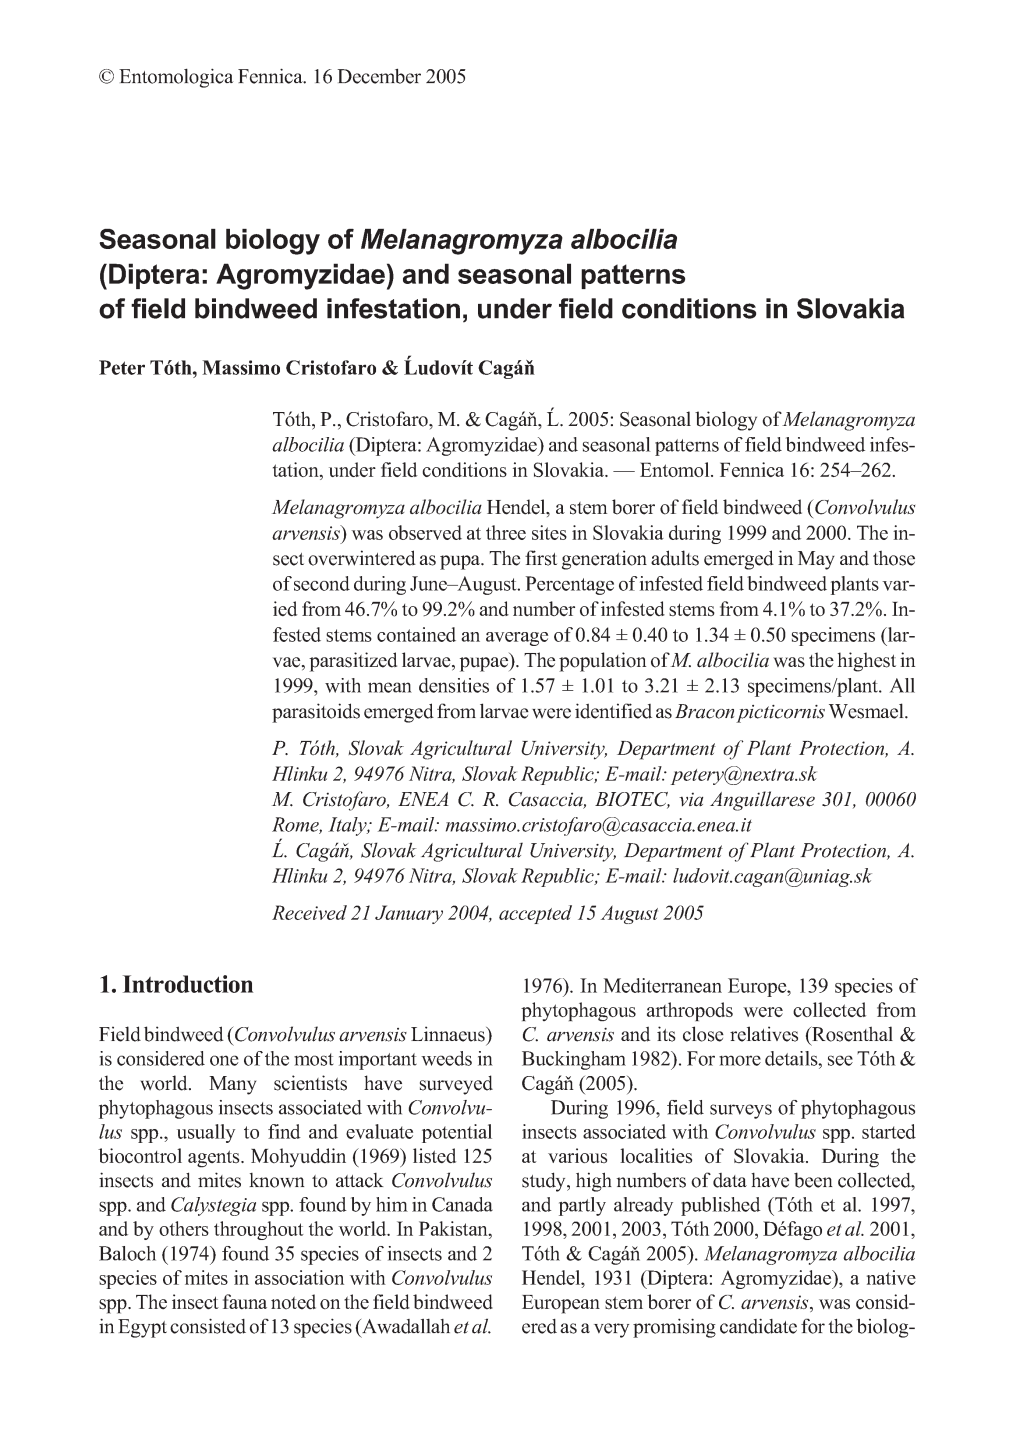 Seasonal Biology of Melanagromyza Albocilia (Diptera: Agromyzidae) and Seasonal Patterns of Field Bindweed Infestation, Under Field Conditions in Slovakia